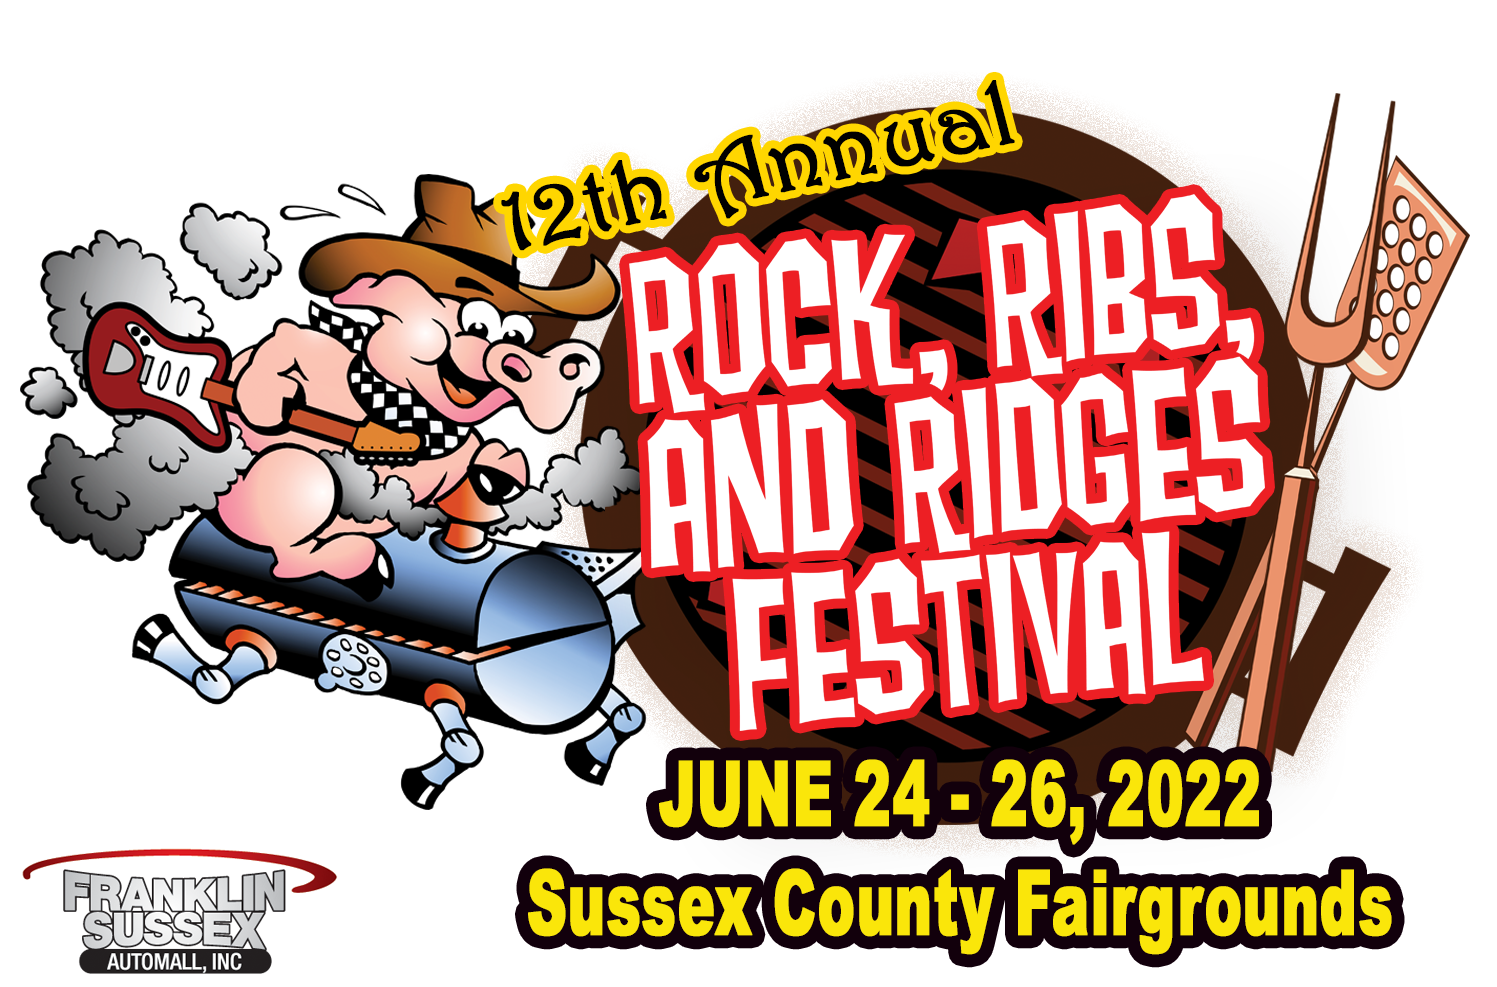 Rock Ribs & Ridges logo